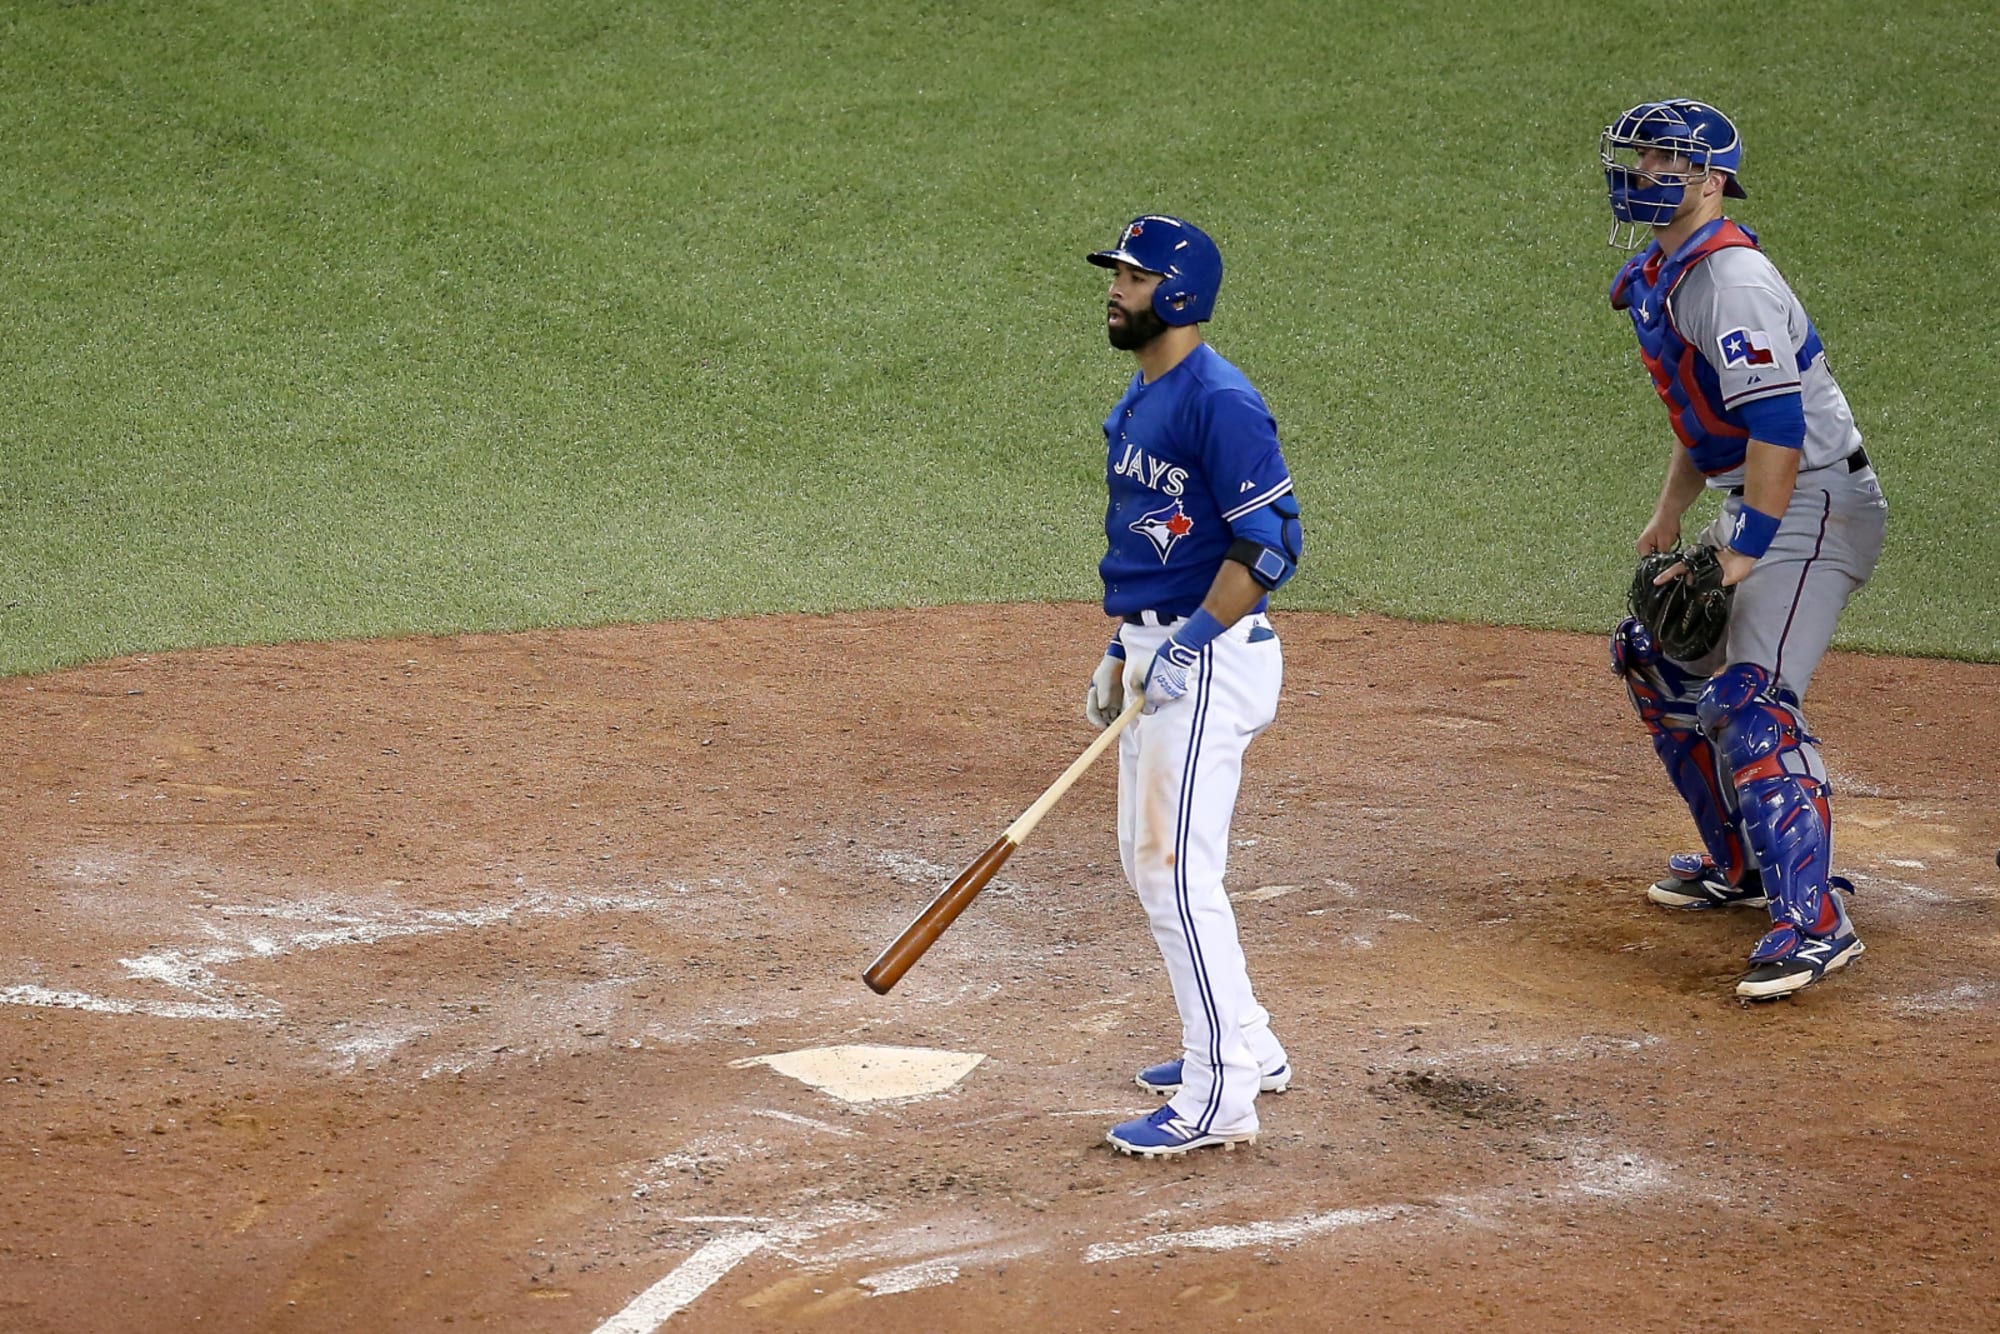 Jose Bautista's bat flip nearly breaks the internet